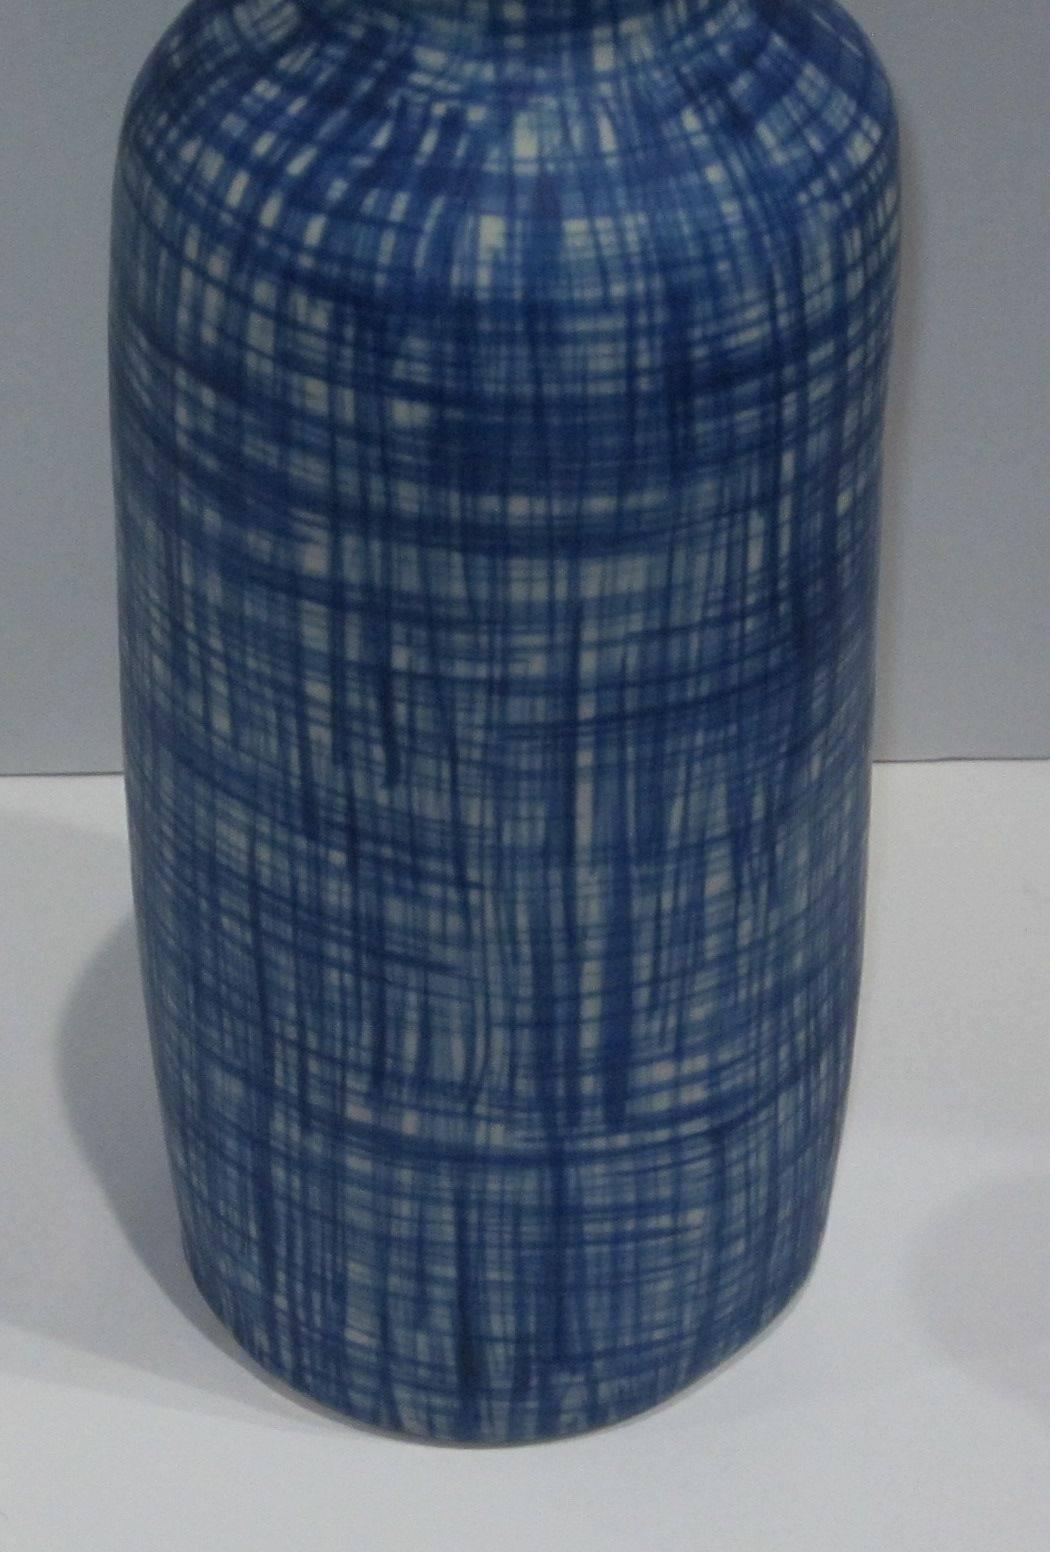 Contemporary Chinese royal blue hashtag pattern stoneware vase.

        